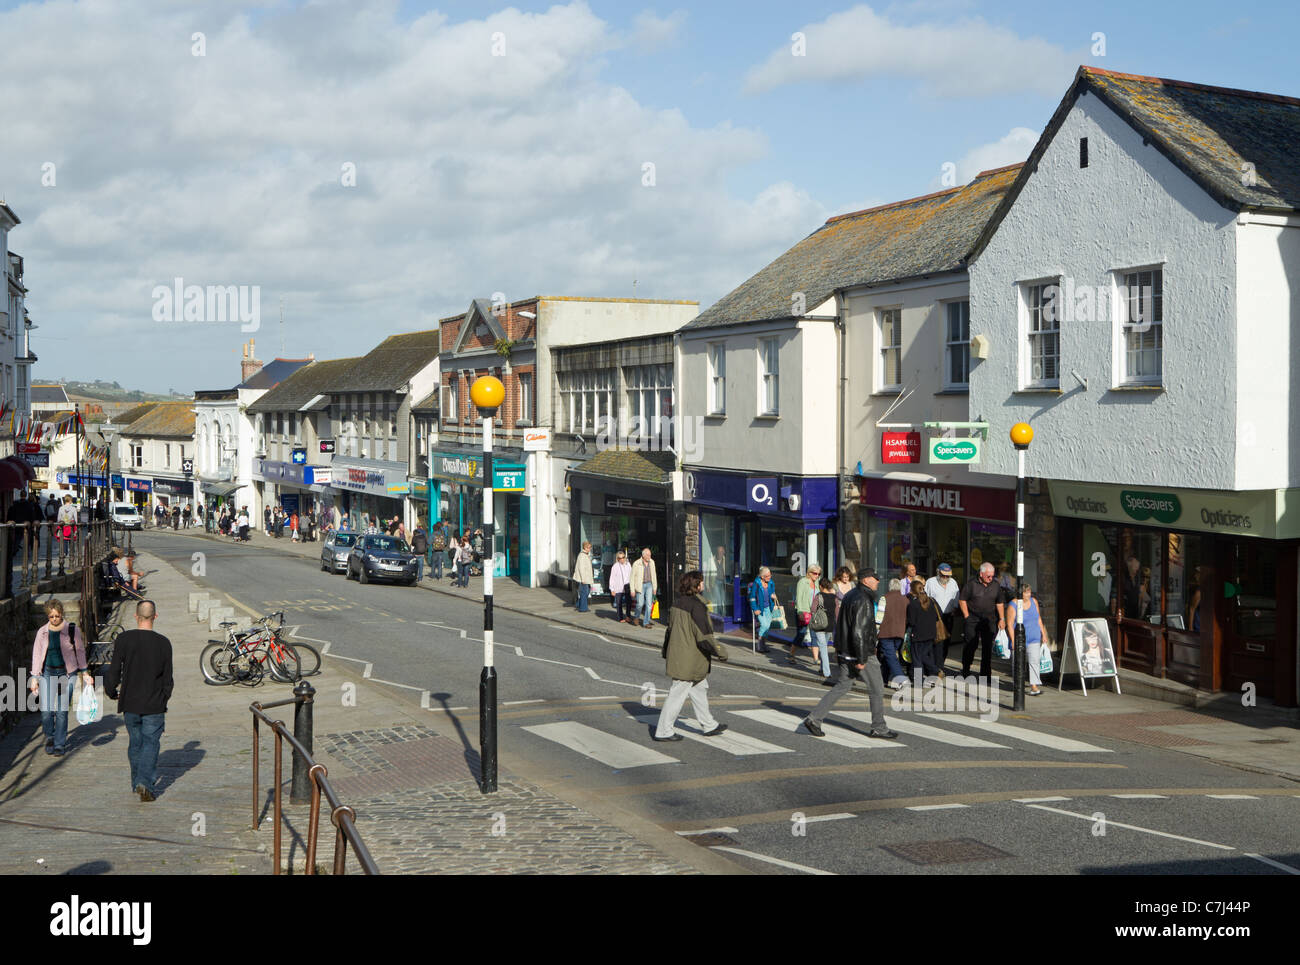 Mercato ebreo Street, Penzance Cornwall Inghilterra England Regno Unito. Foto Stock